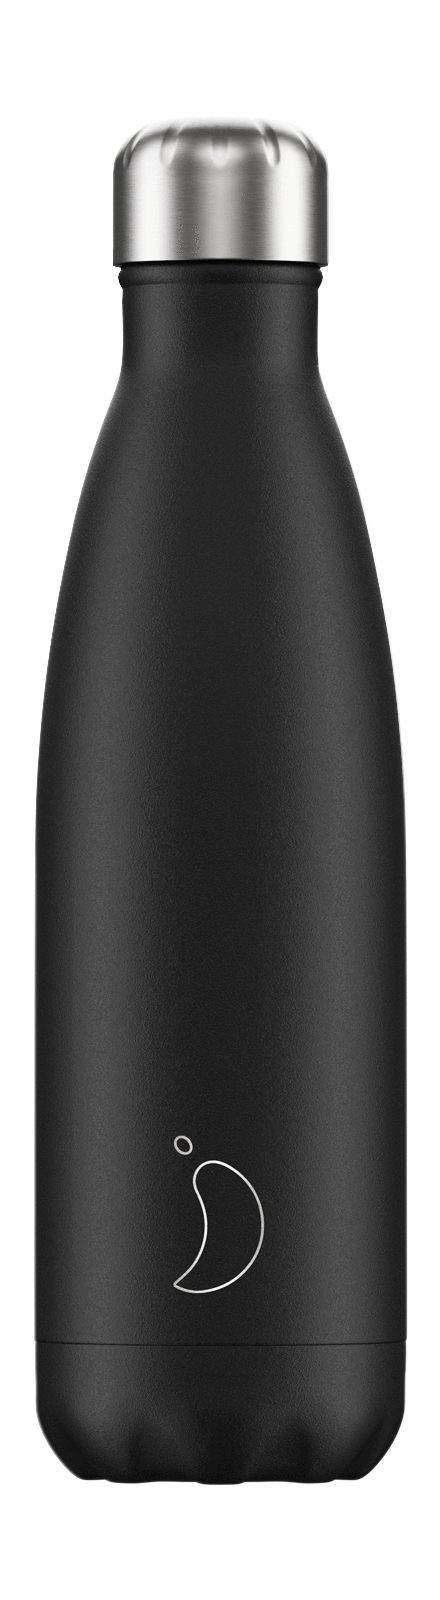 cadeauxwells - 500ml Chilly's Bottle - Monochrome Black - Chilly's Bottles - Homewares